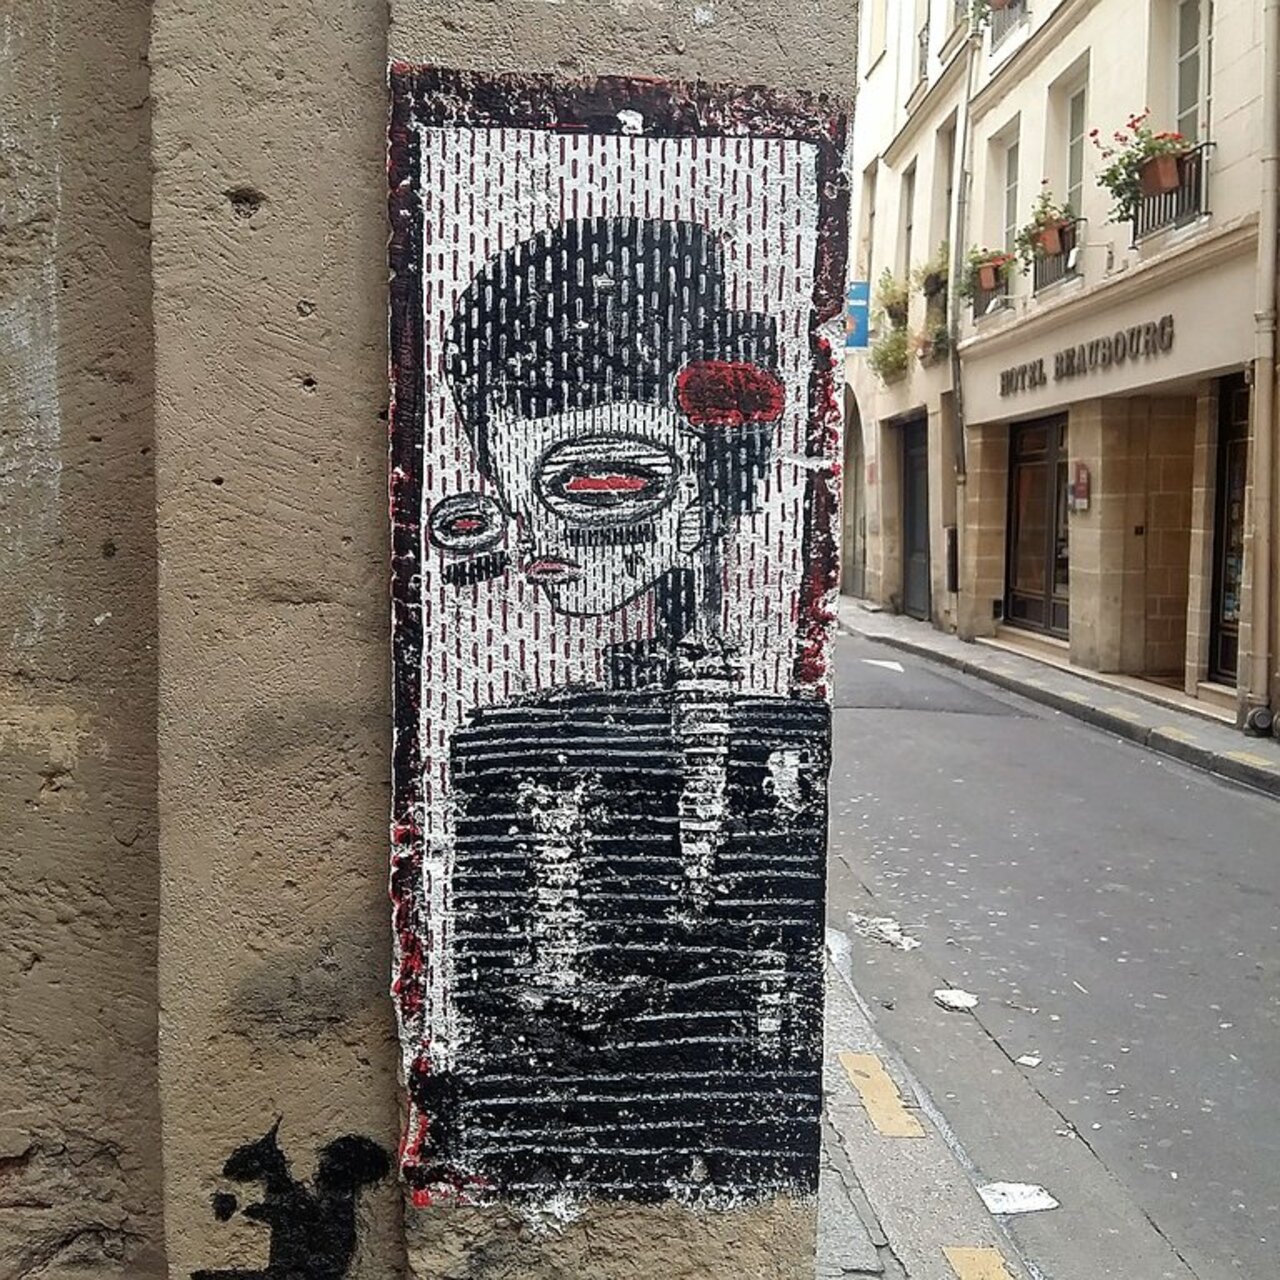 Street Art by alo_art in #Paris http://www.urbacolors.com #art #mural #graffiti #streetart https://t.co/eK3MKK6jZM